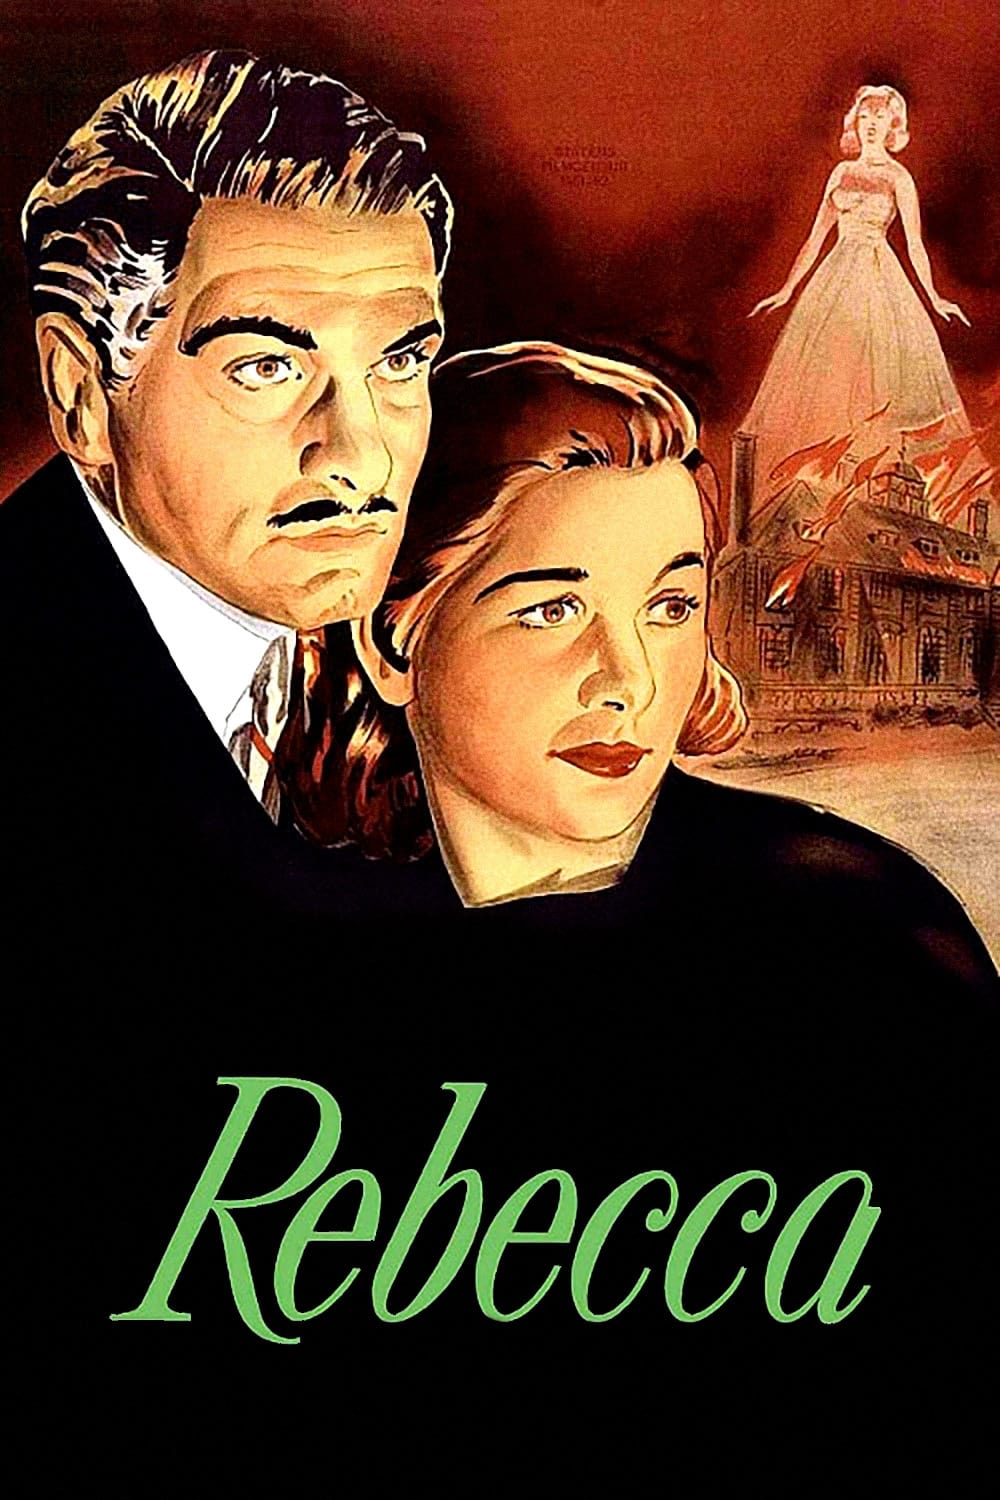 Rebecca, A Mulher Inesquecível (1940)